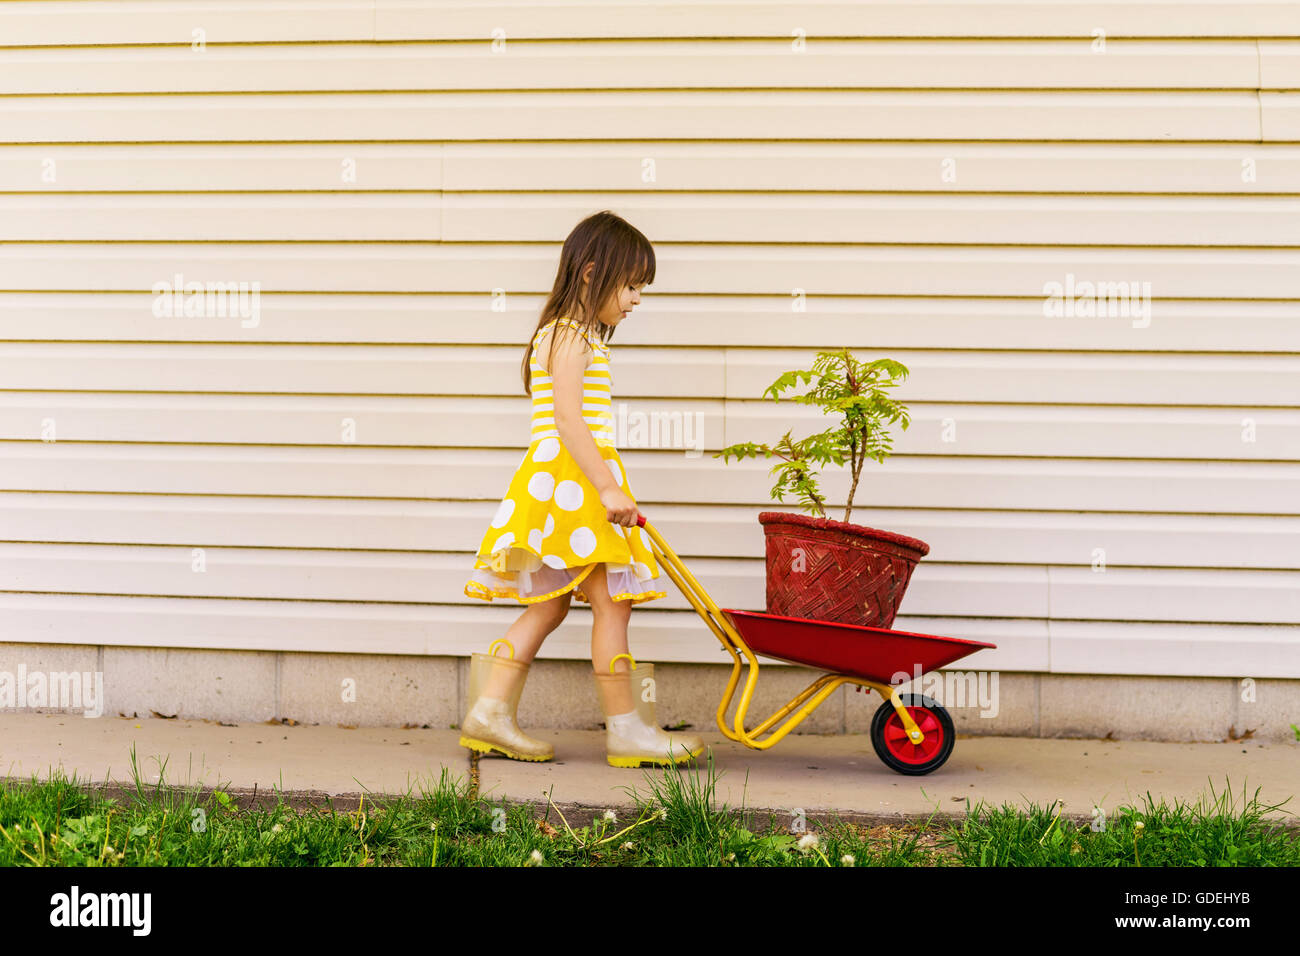 Girl in polka dot dress pushing wheelbarrow with plant Stock Photo